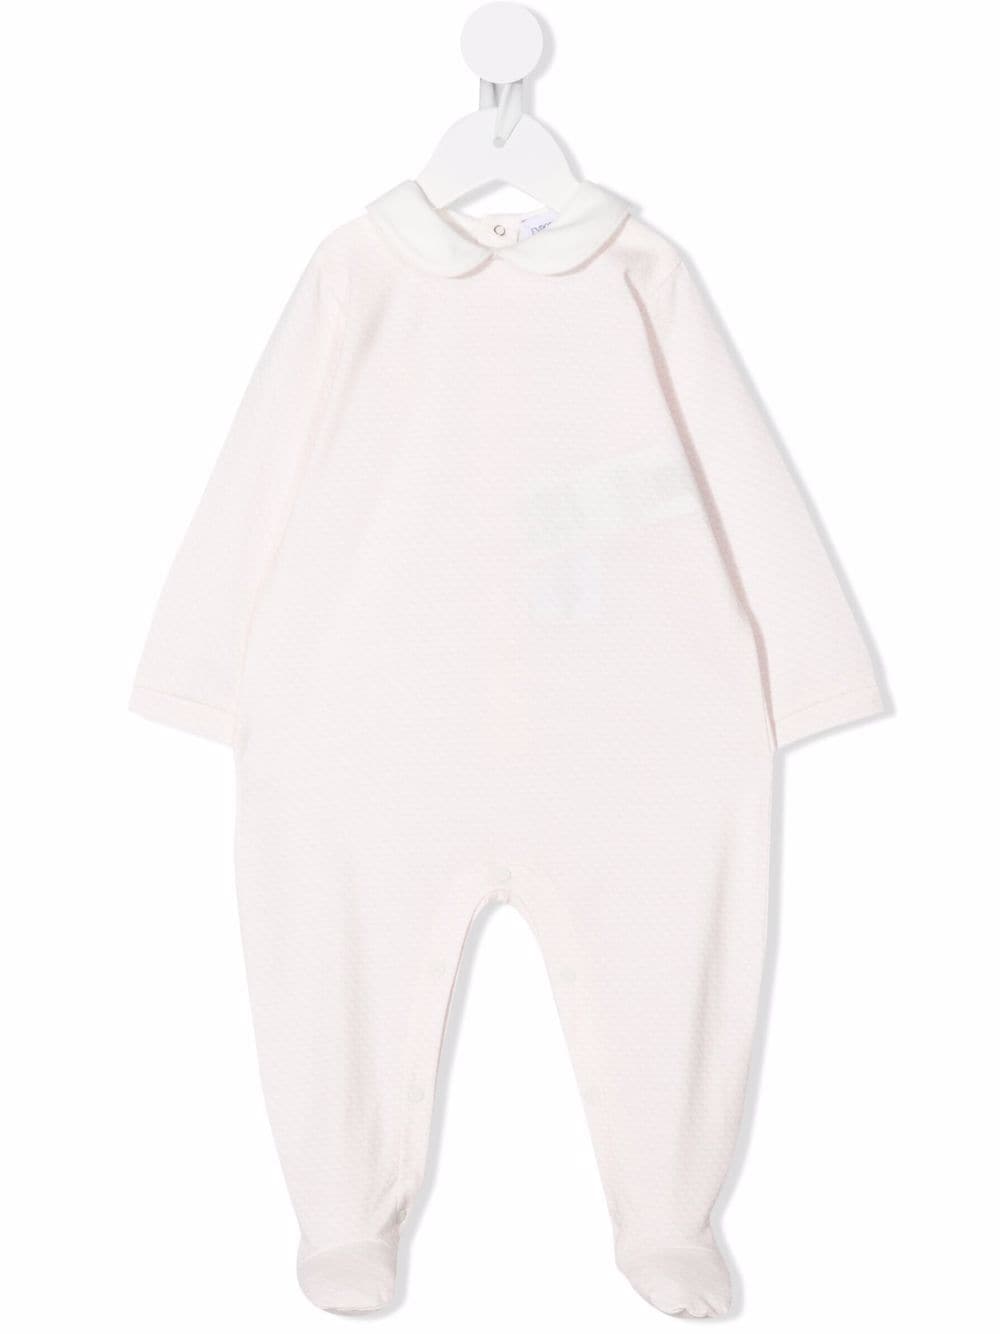 White pajamas for baby girls